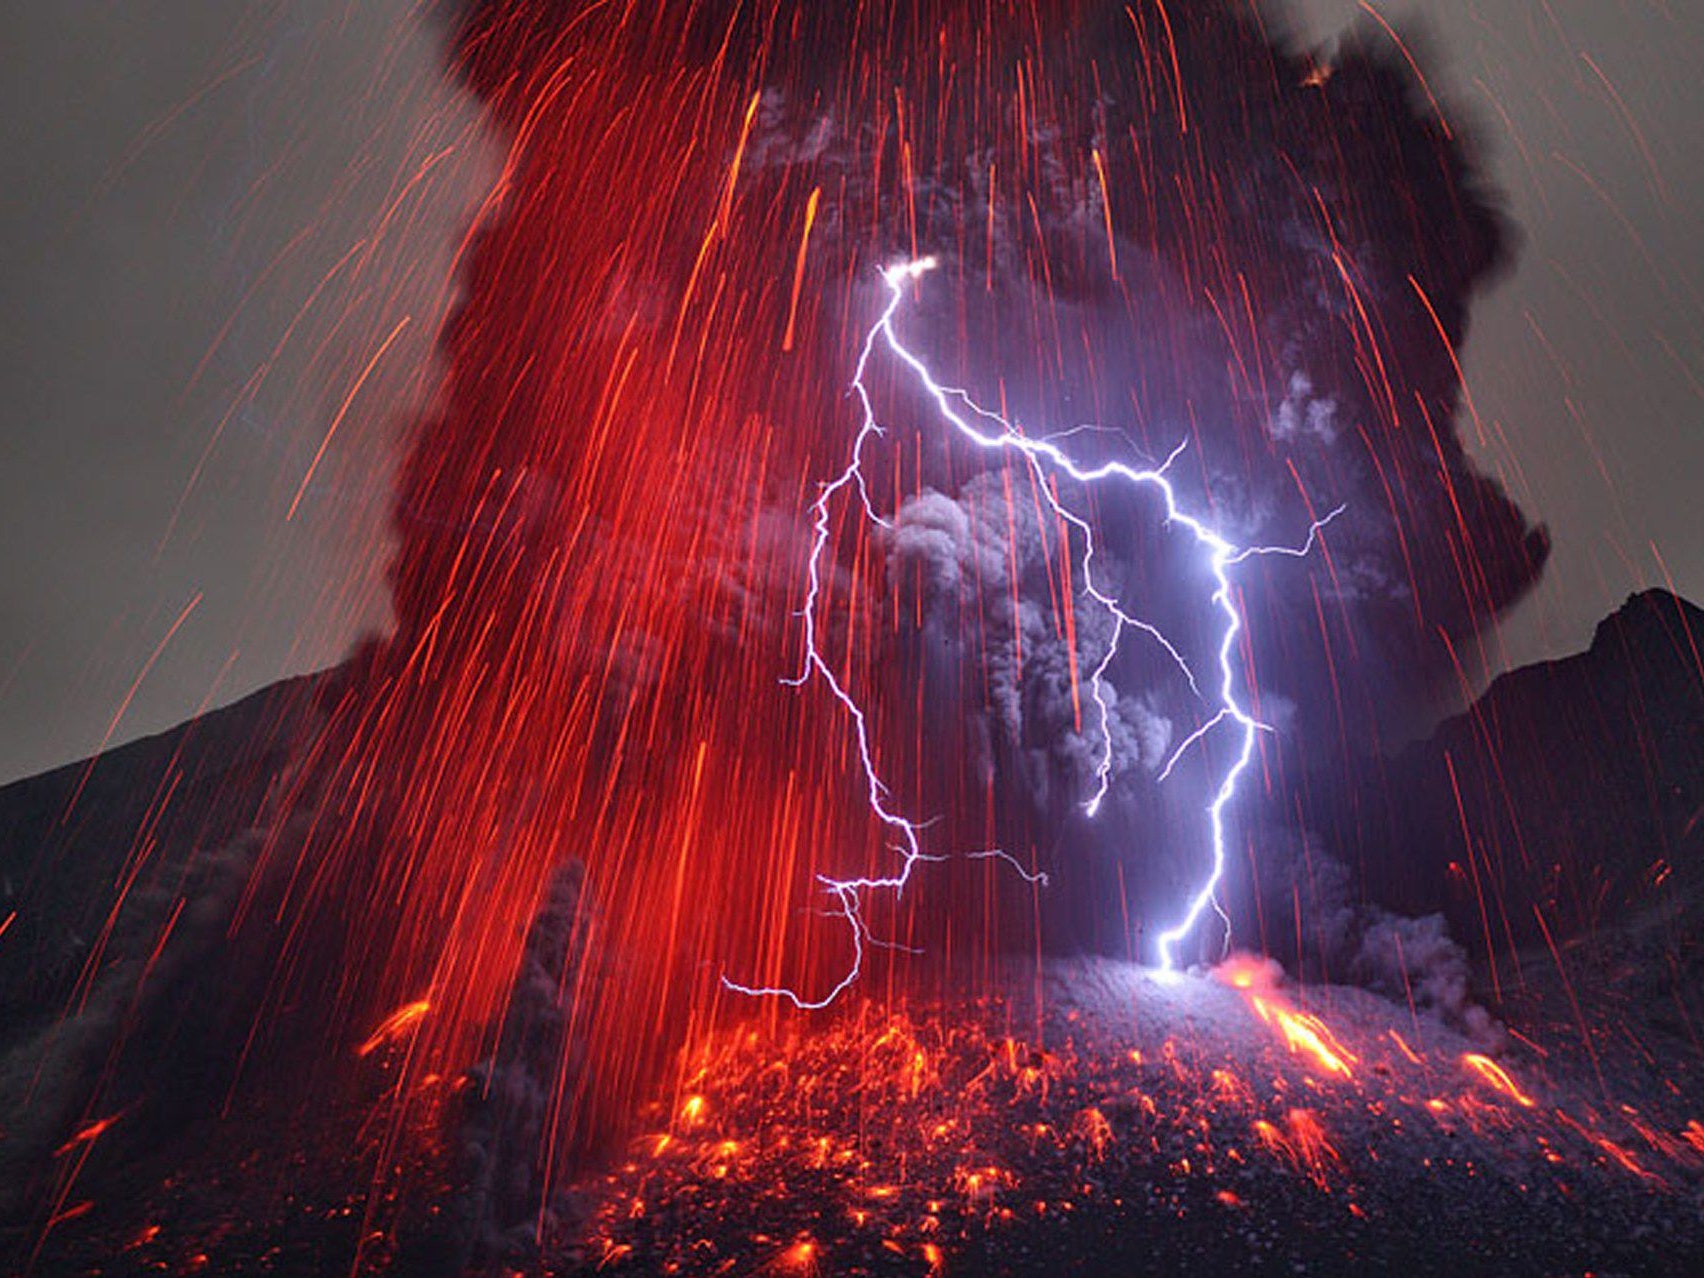 Stunning volcanic lightning captured on film